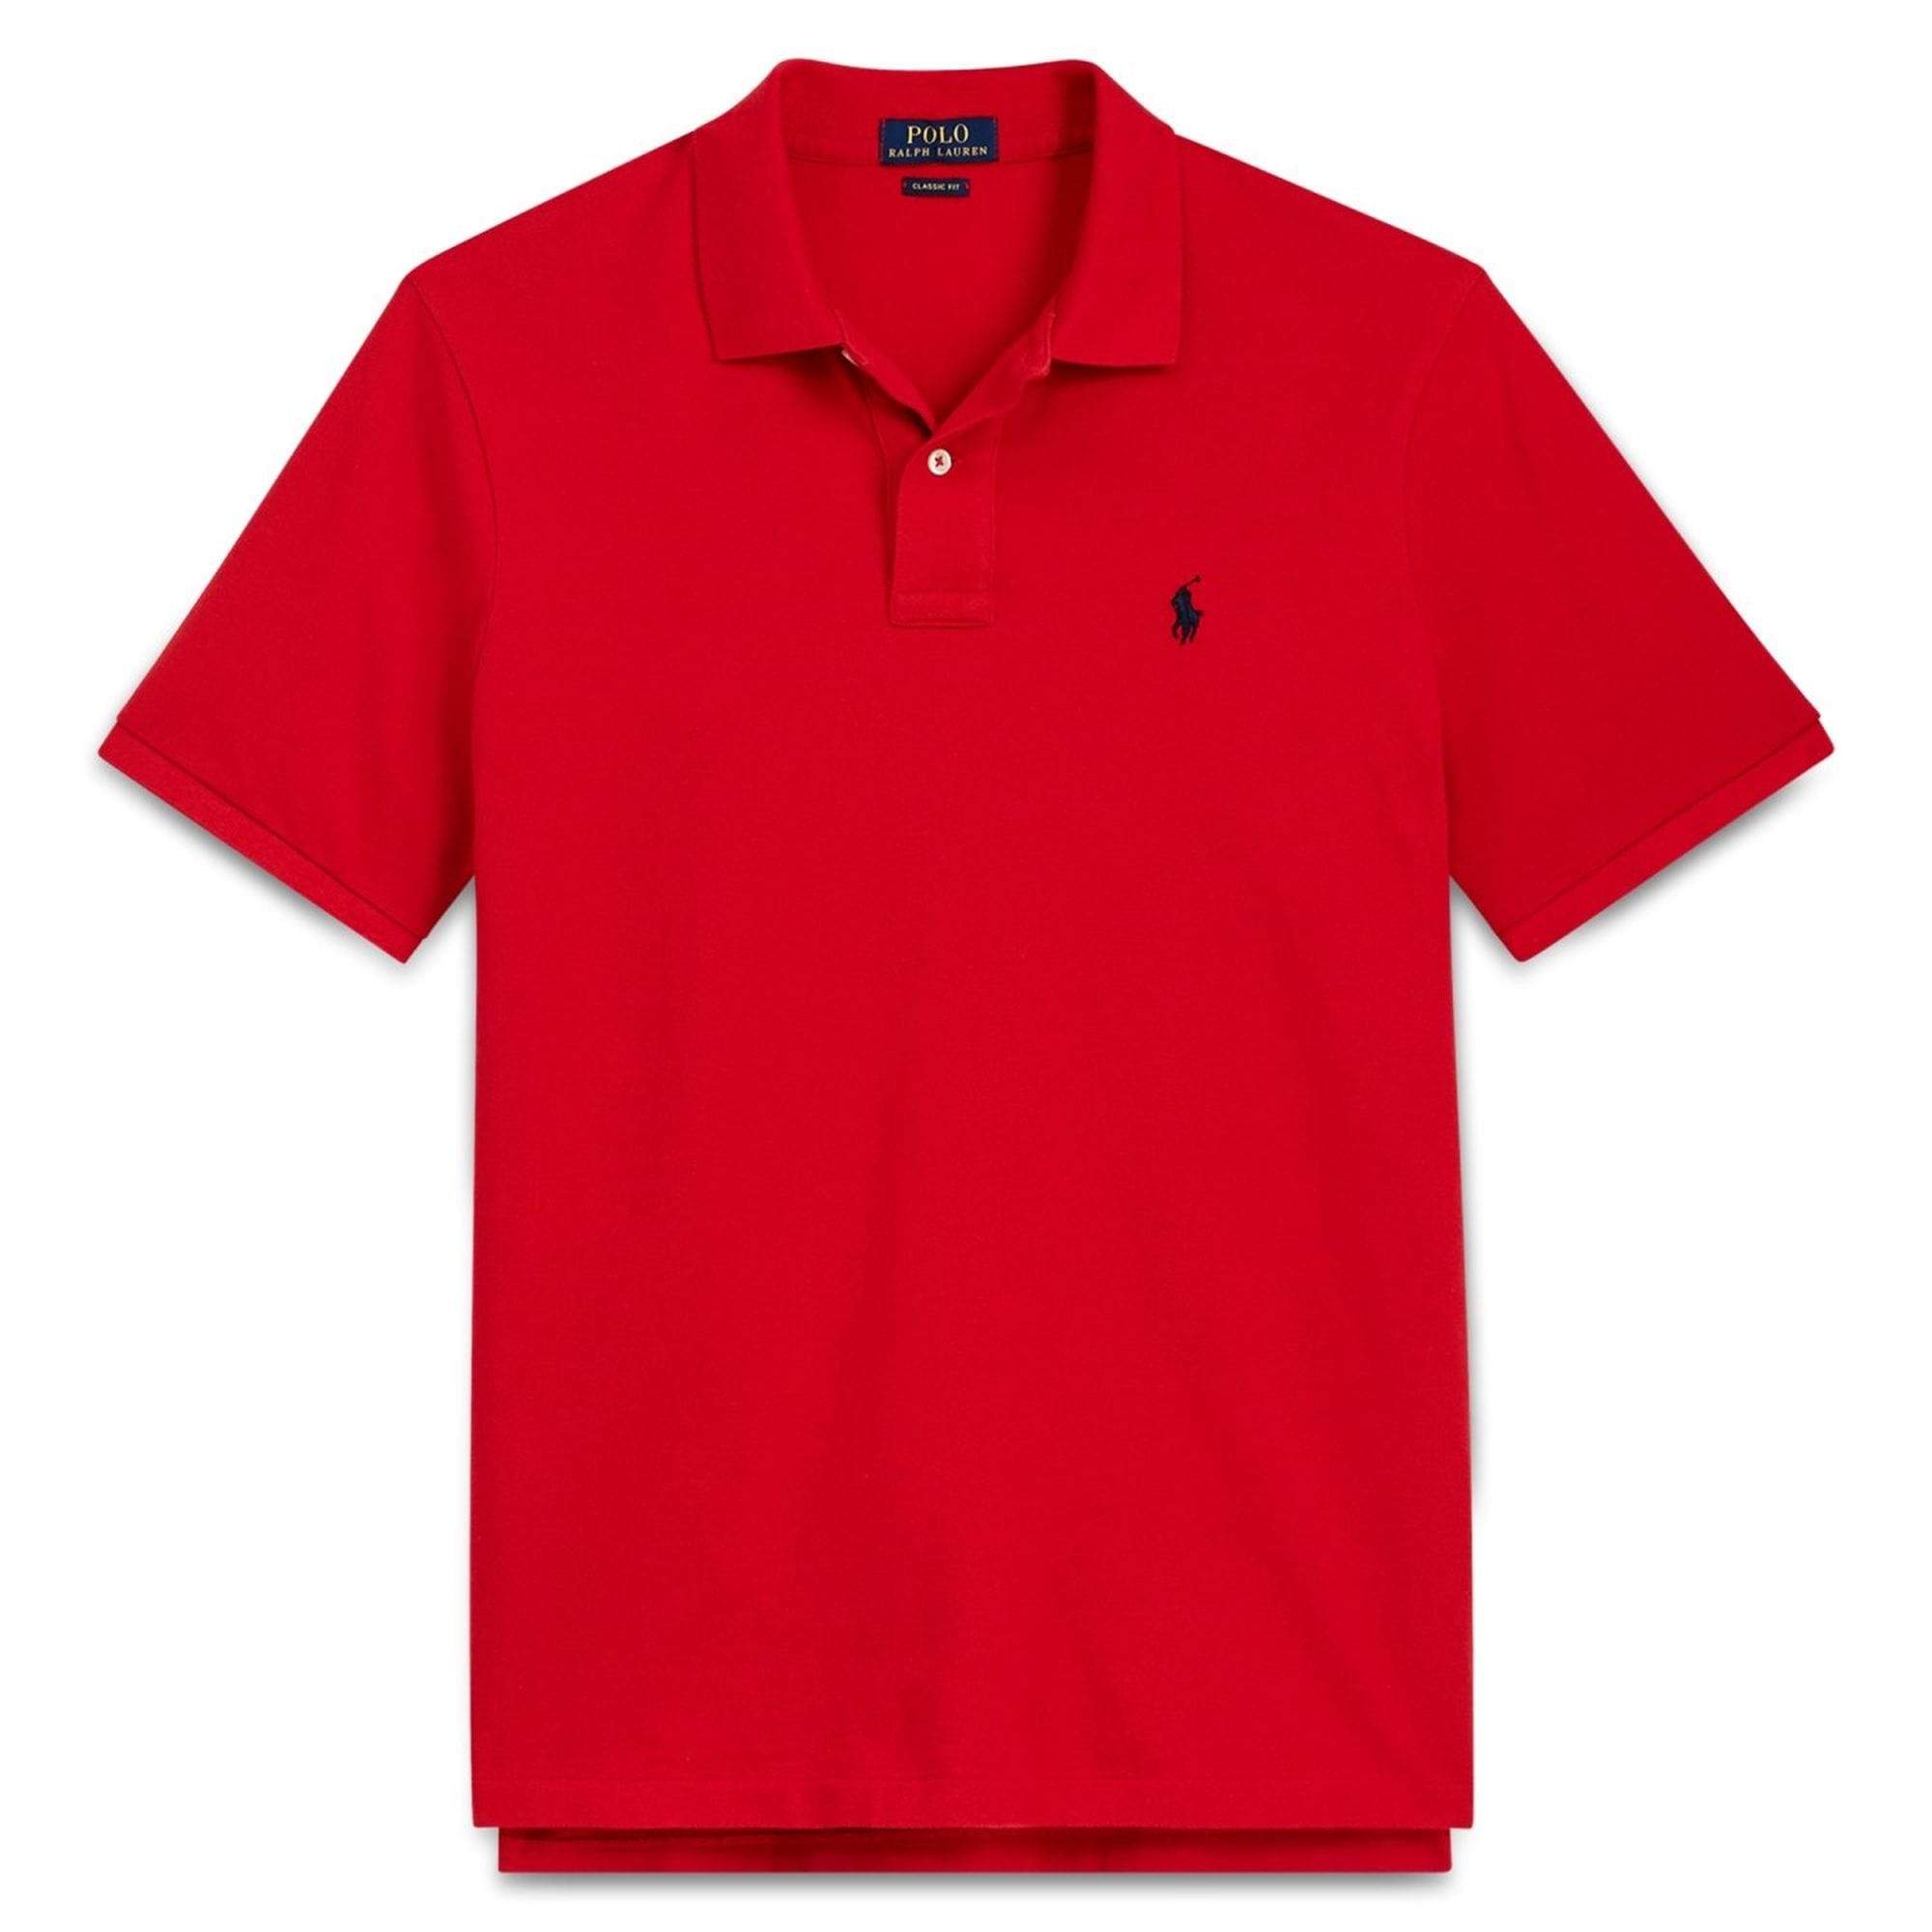 Polo Ralph Lauren - Polo Shirts - Polo Ralph Lauren Red Polo Shirt